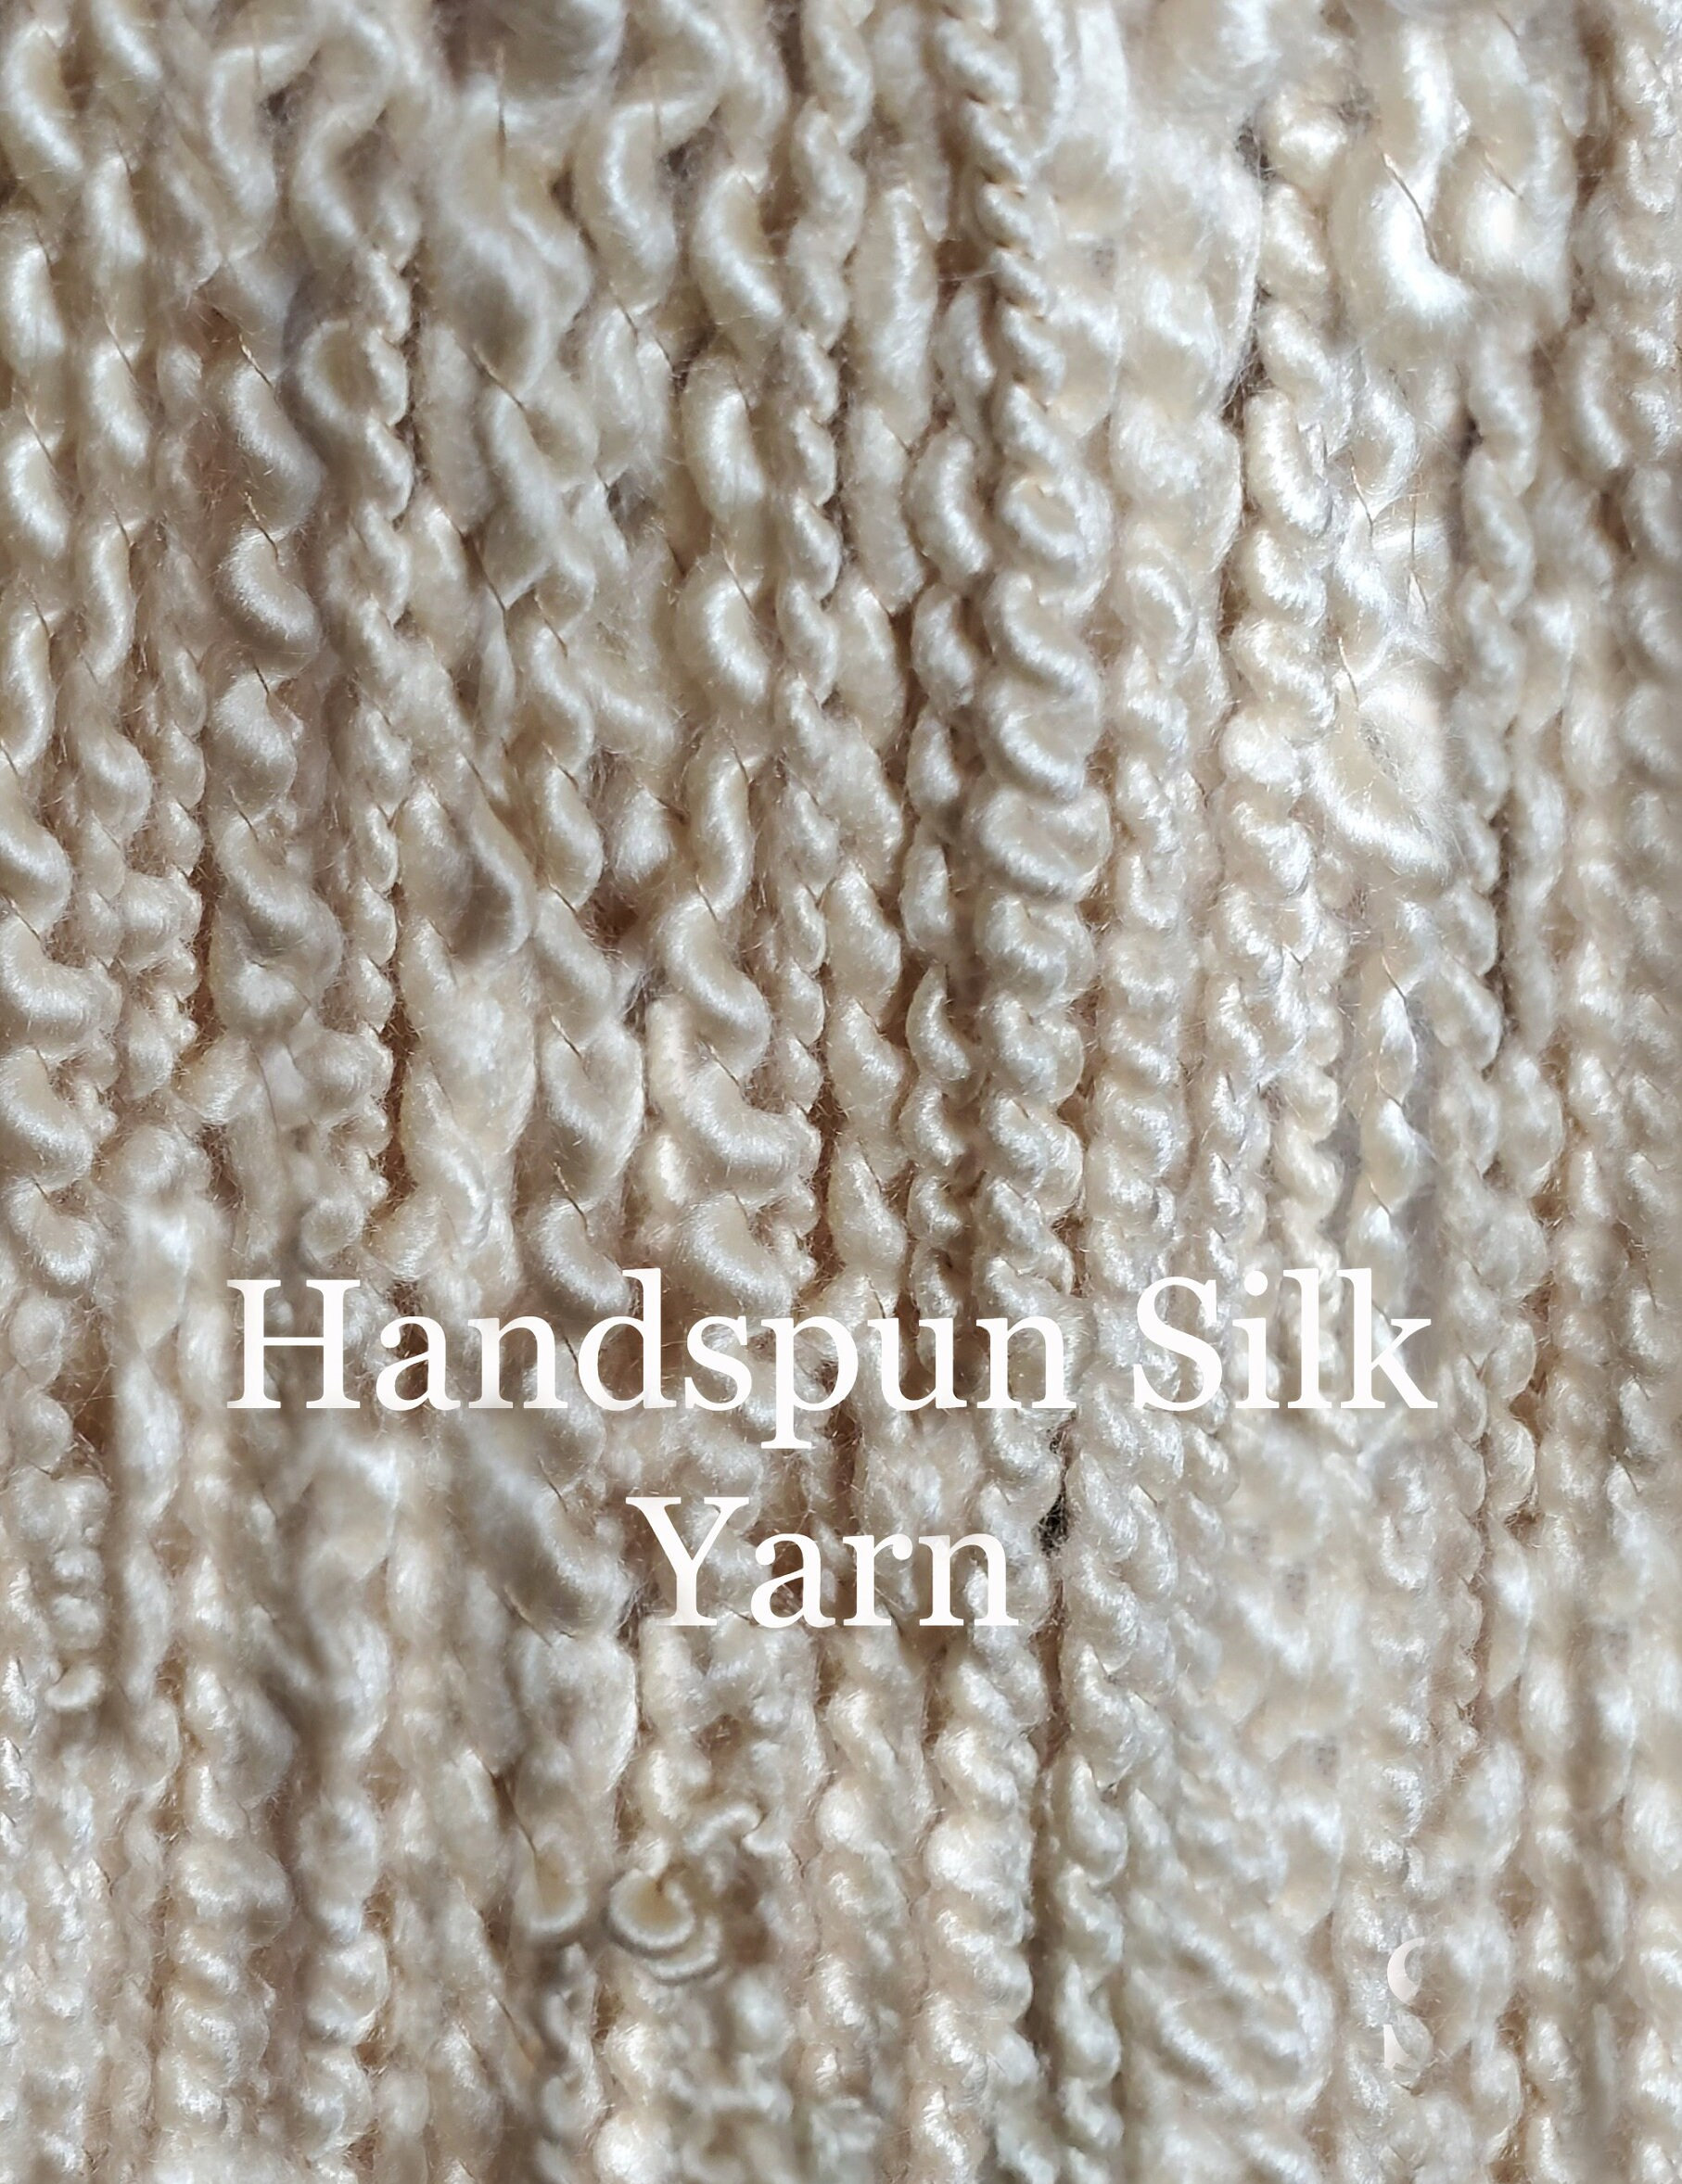 Taiyo 100% Bombyx Spun Silk Yarn 30/2 cones and skeins